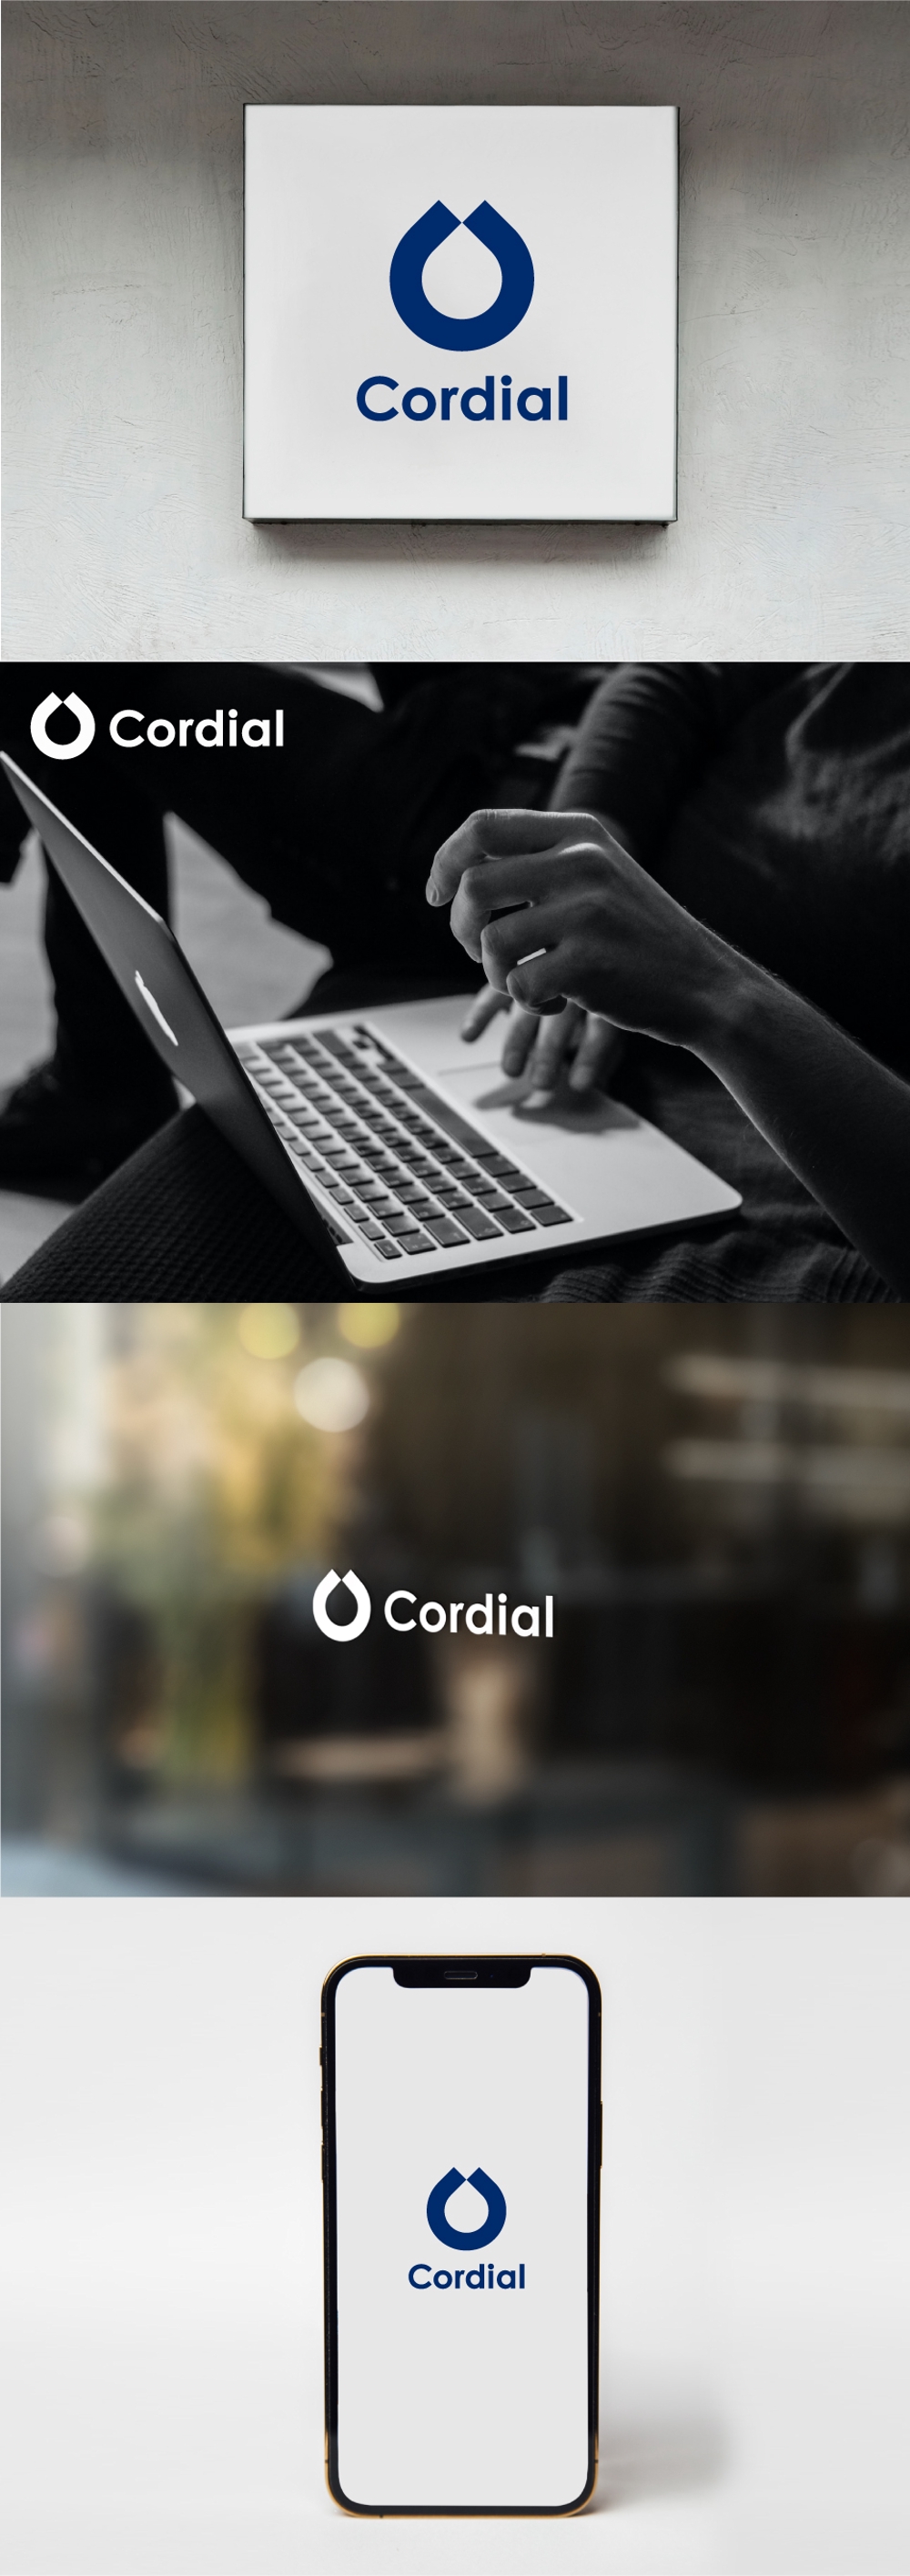 IT系・DX系・モノづくり系企業向けの営業パーソン向け研修会社「Cordial」のロゴ